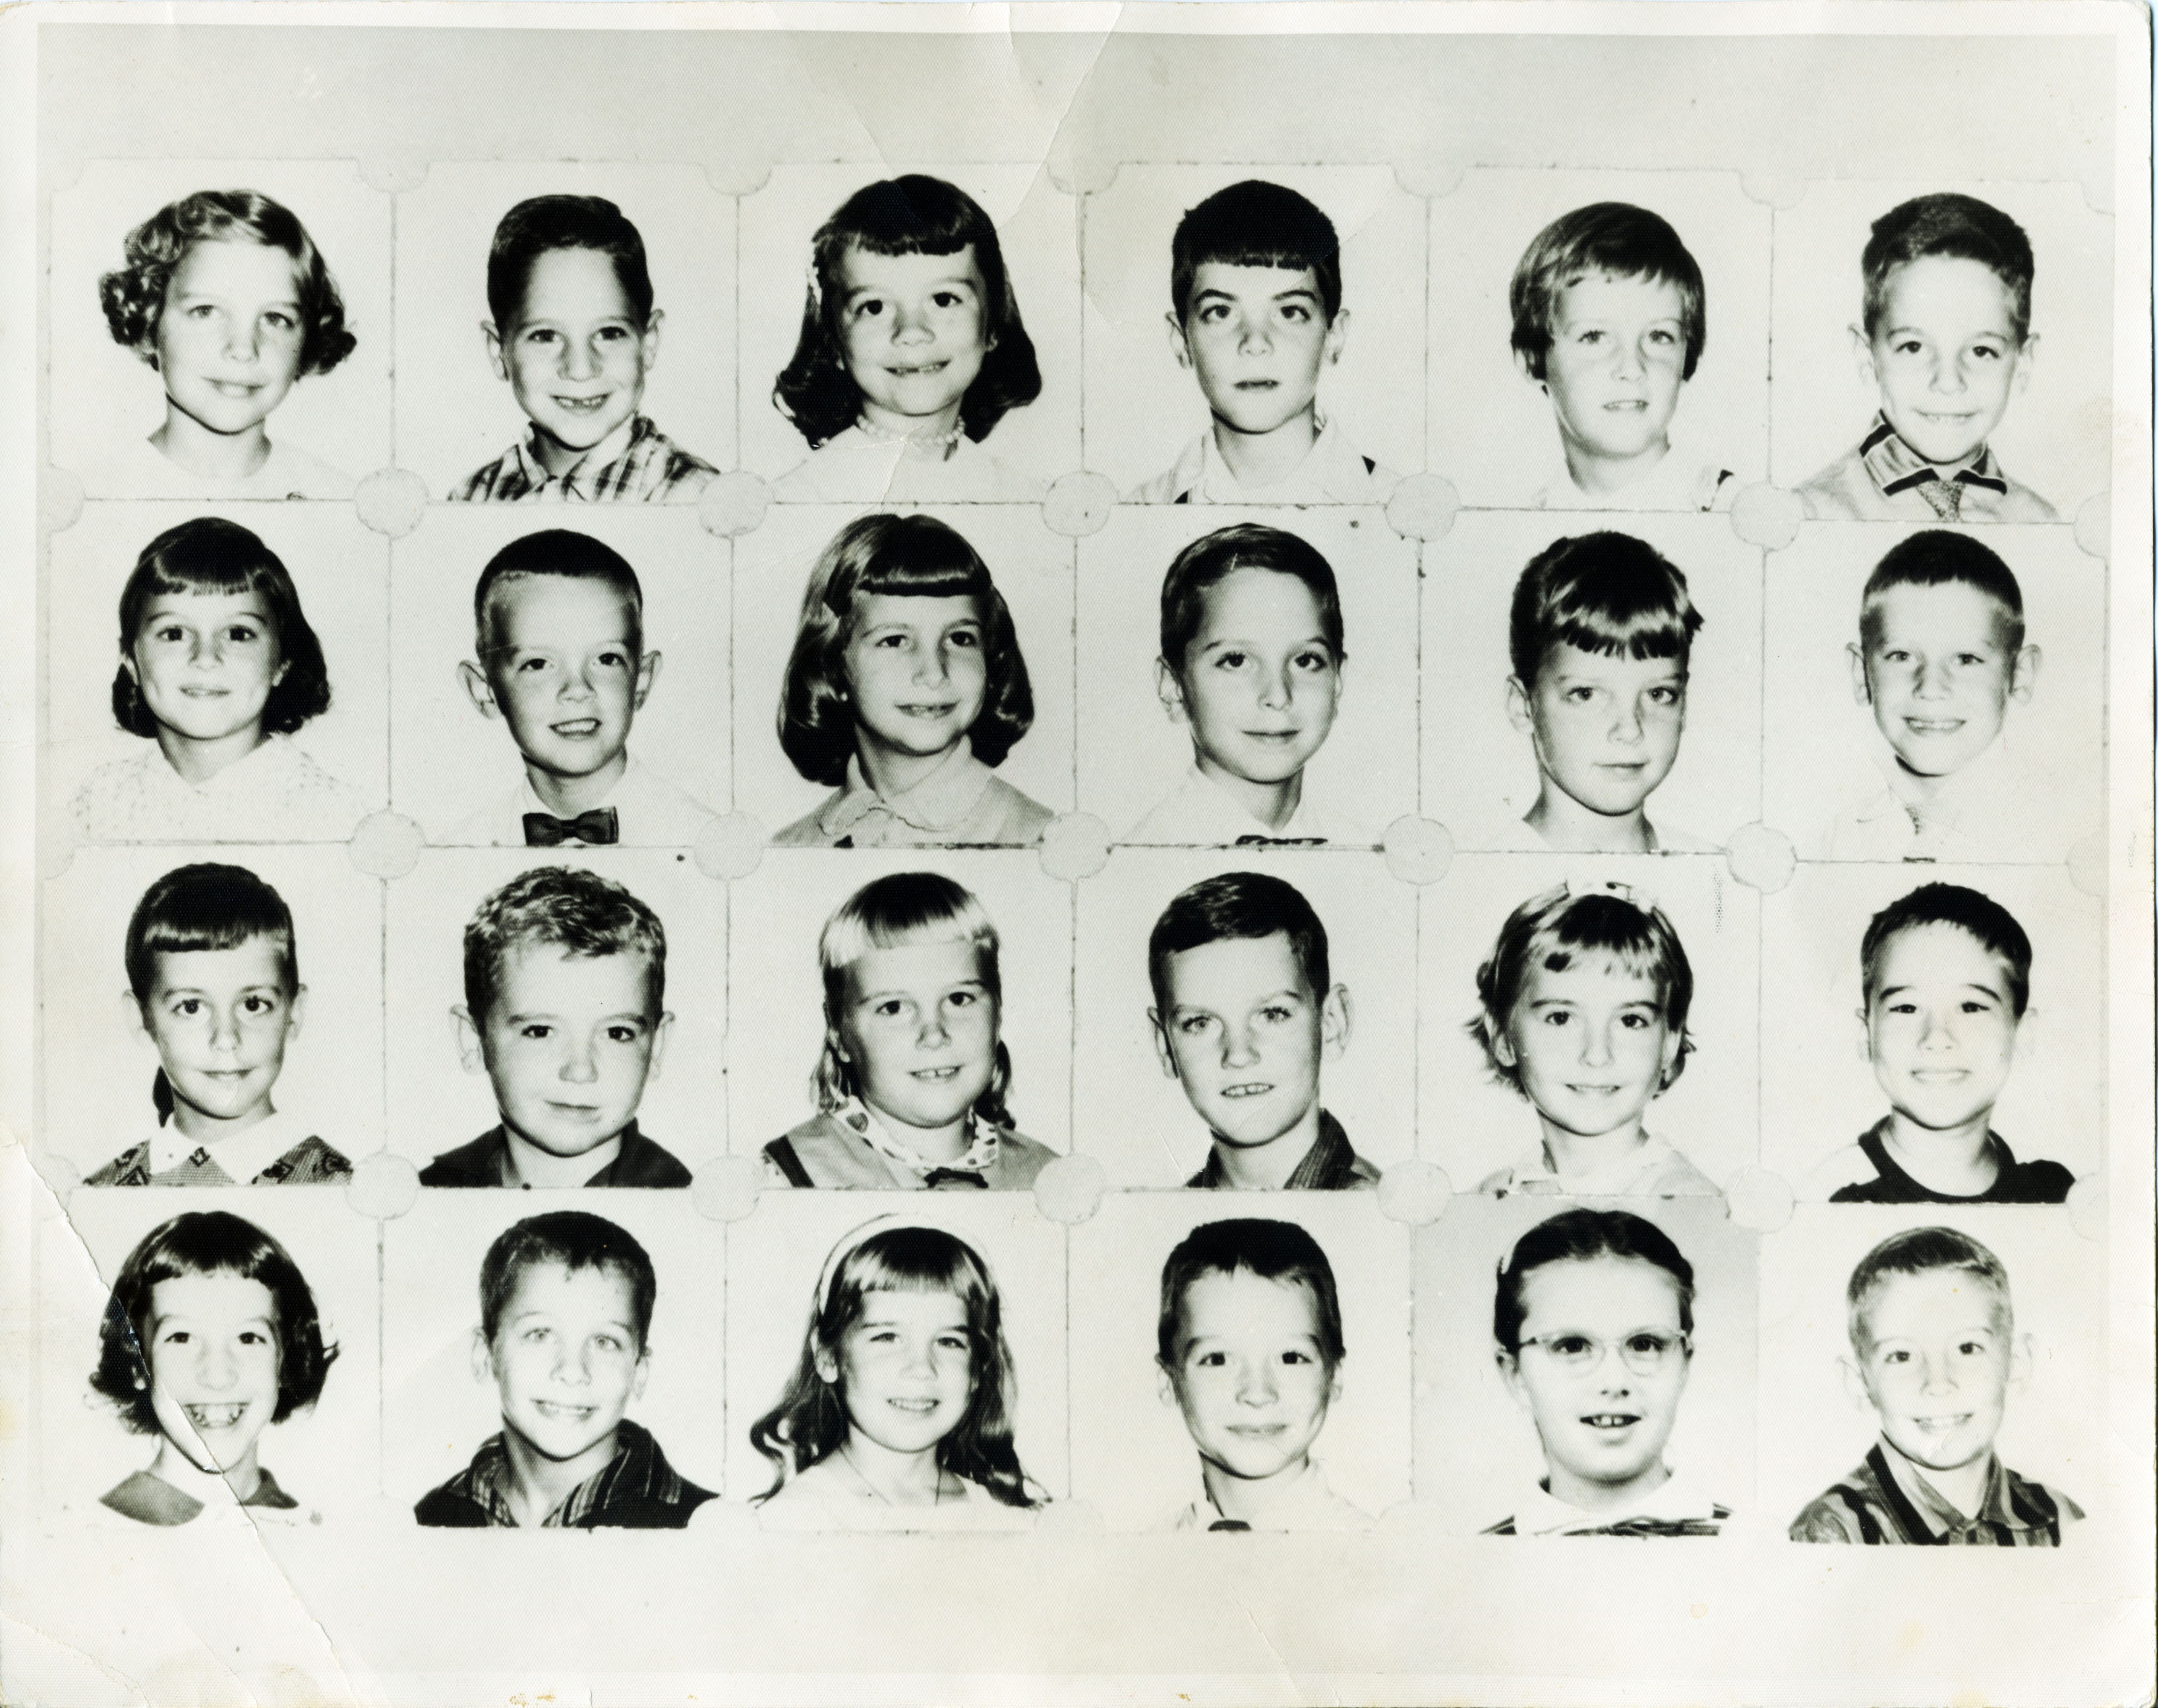 Garrettford Elementary School - Miss McCorkle's 2nd Grade Class (1957-58)

